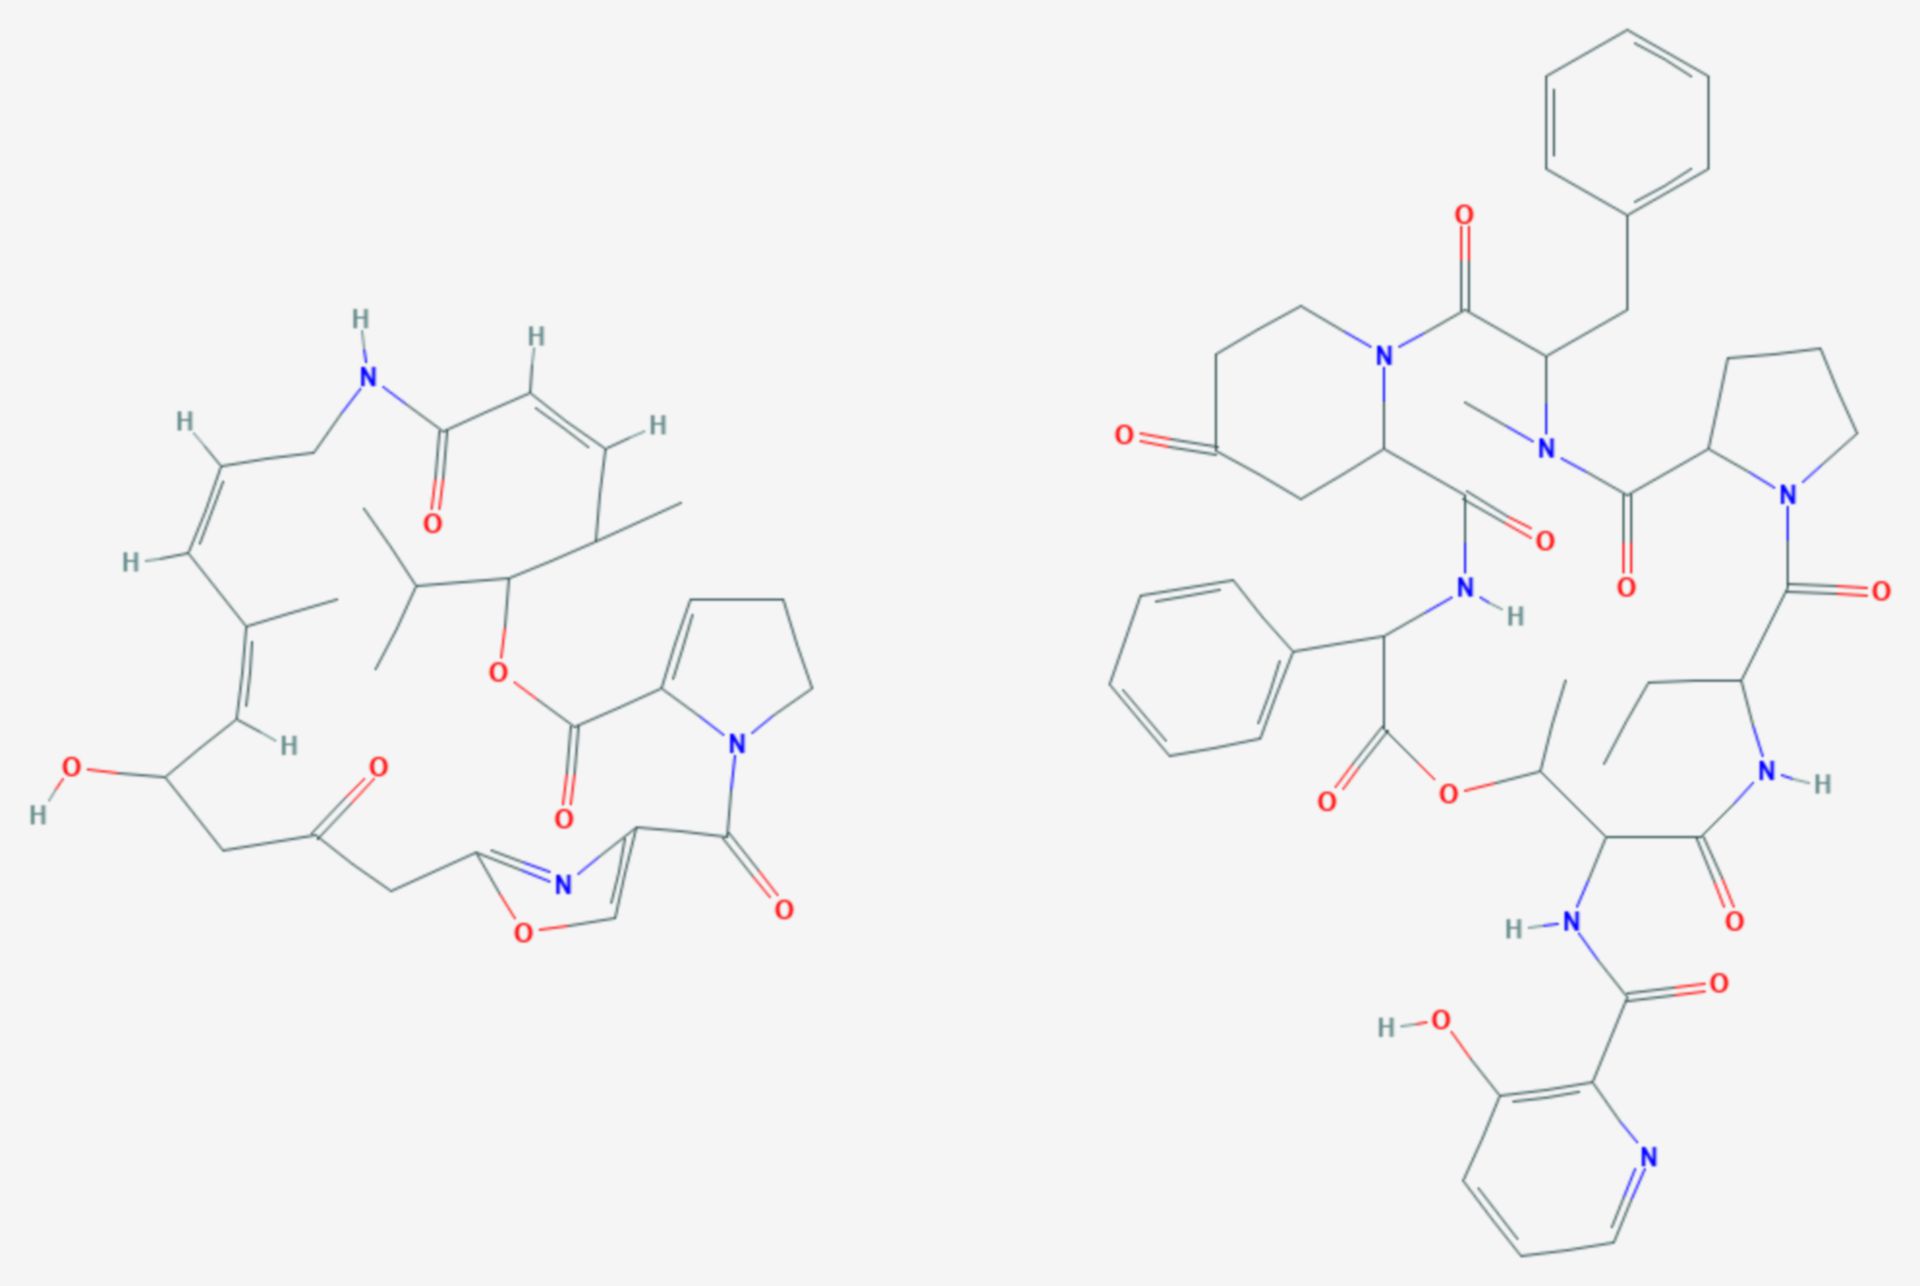 Pristinamycin (Strukturformel)